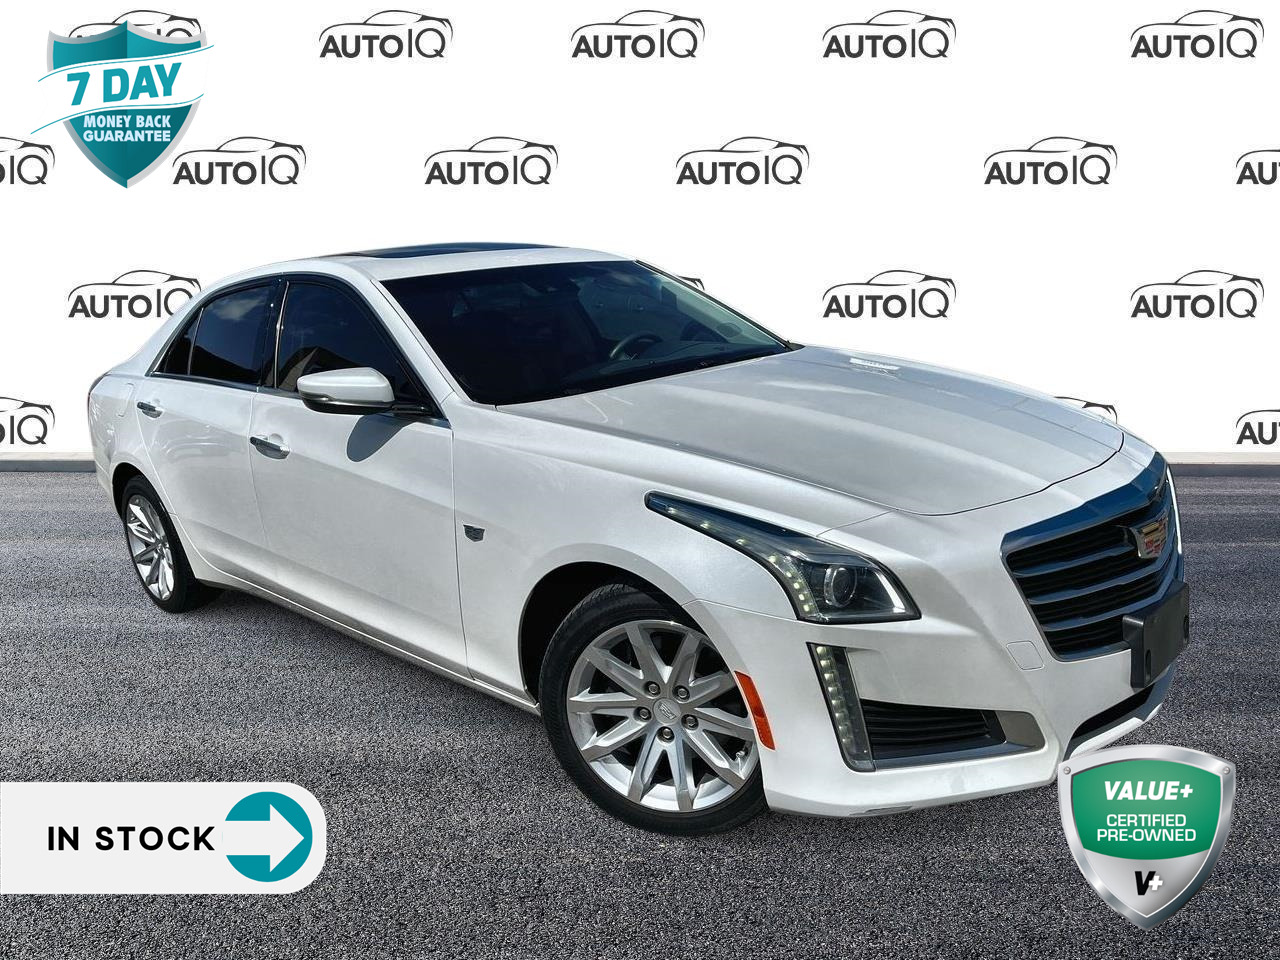 2015 Cadillac CTS 3.6L Luxury